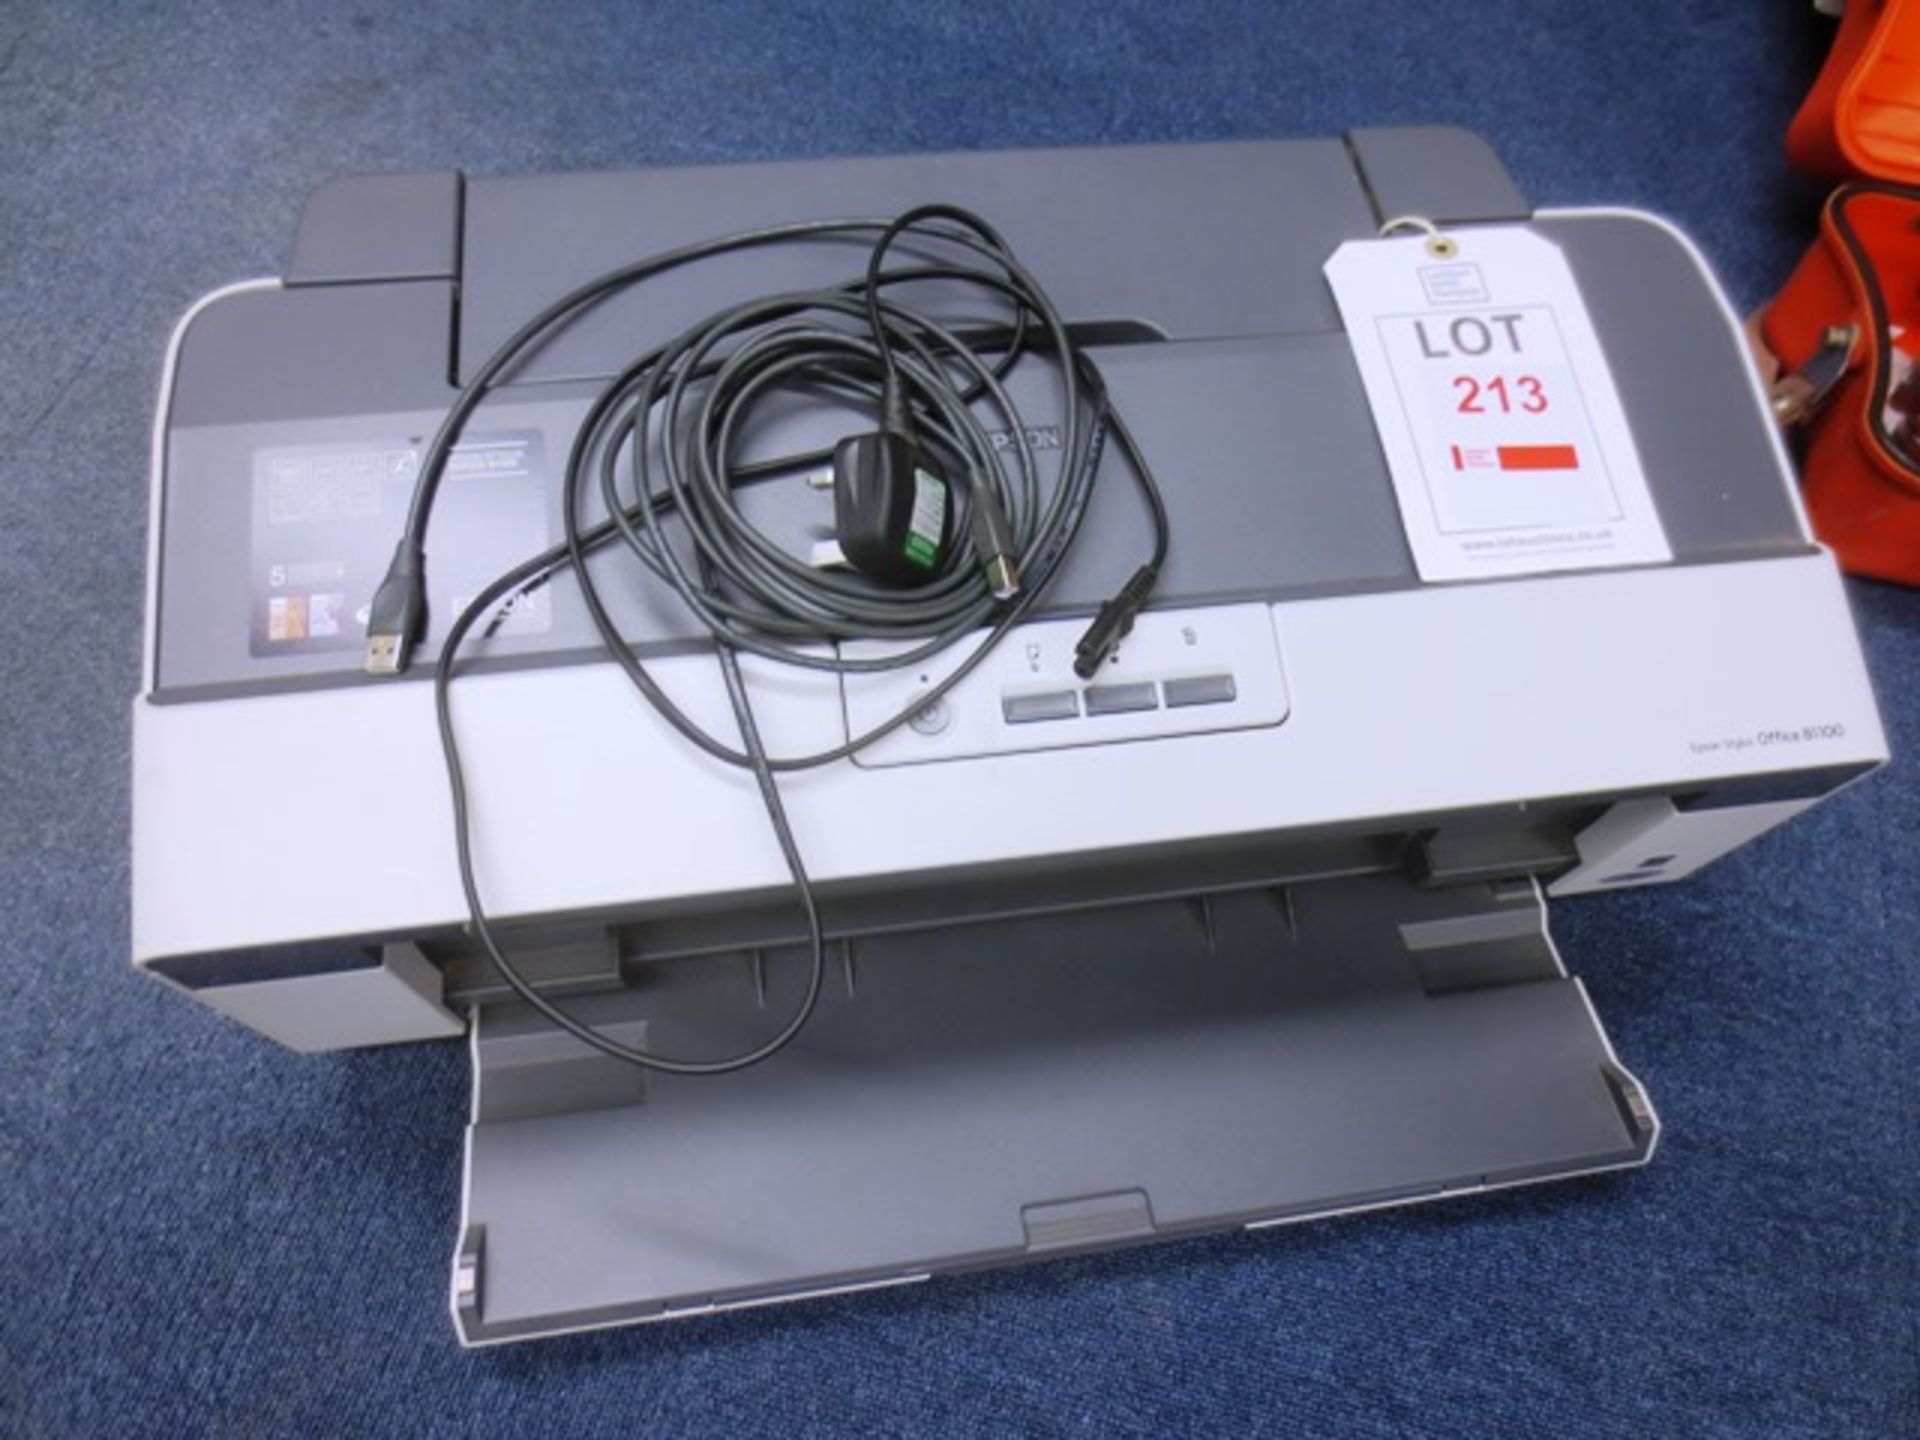 Epson Stylus Office B110 inkjet printer